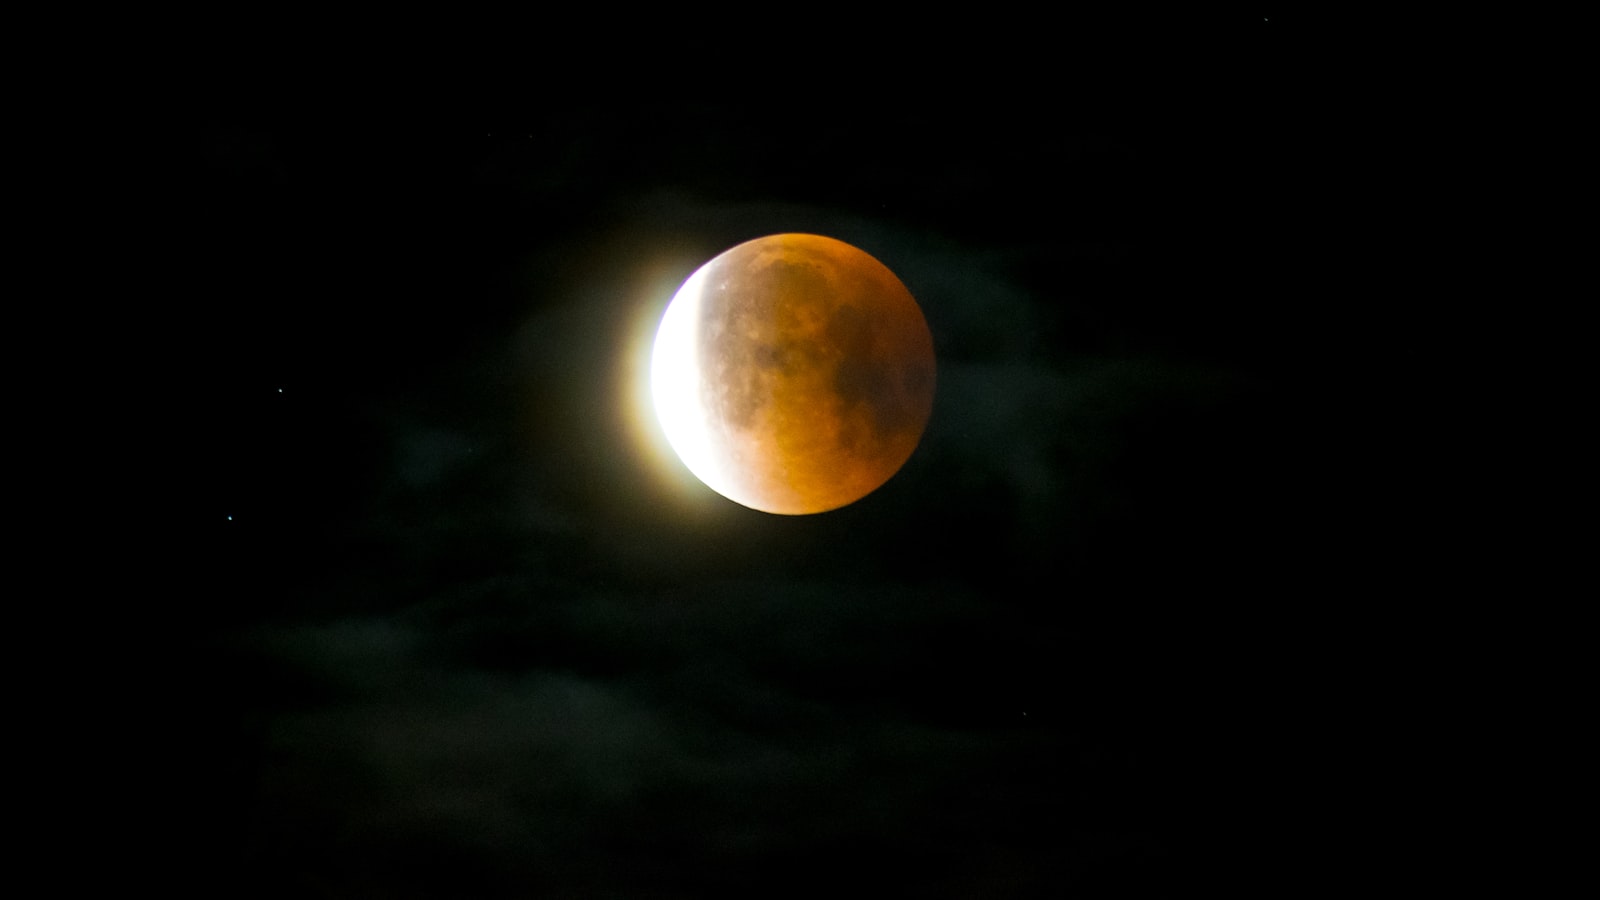 The Lunar Eclipse